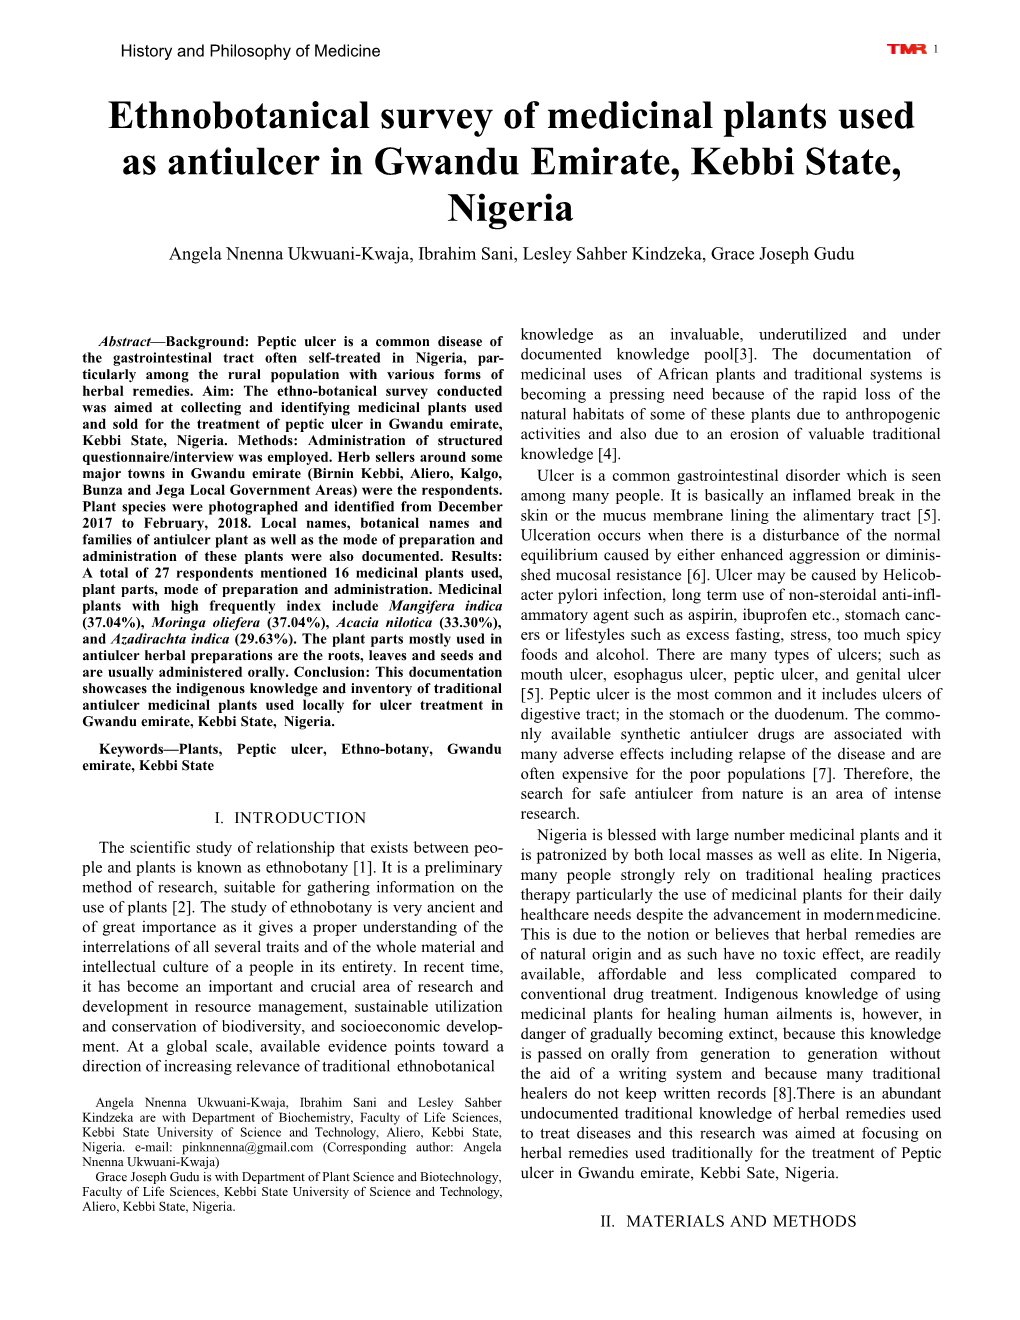 Ethnobotanical Survey of Medicinal Plants Used As Antiulcer in Gwandu